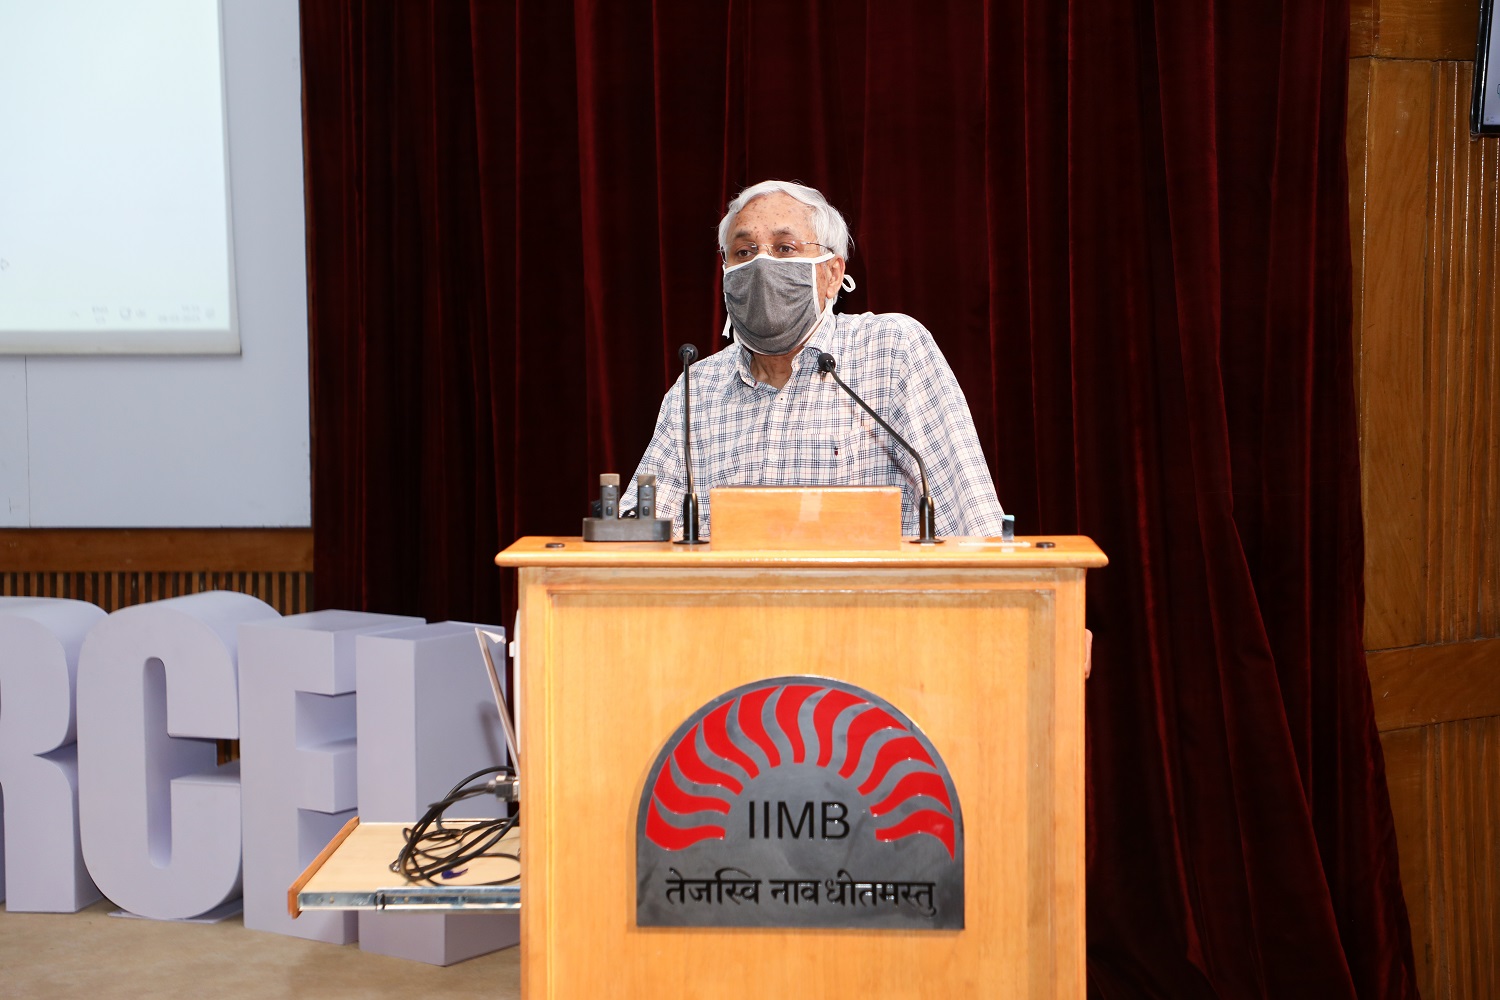 Prof. Suresh Bhagavatula, faculty in the Entrepreneurship Area at IIMB, congratulates the contributors and editors of SHAKTI.